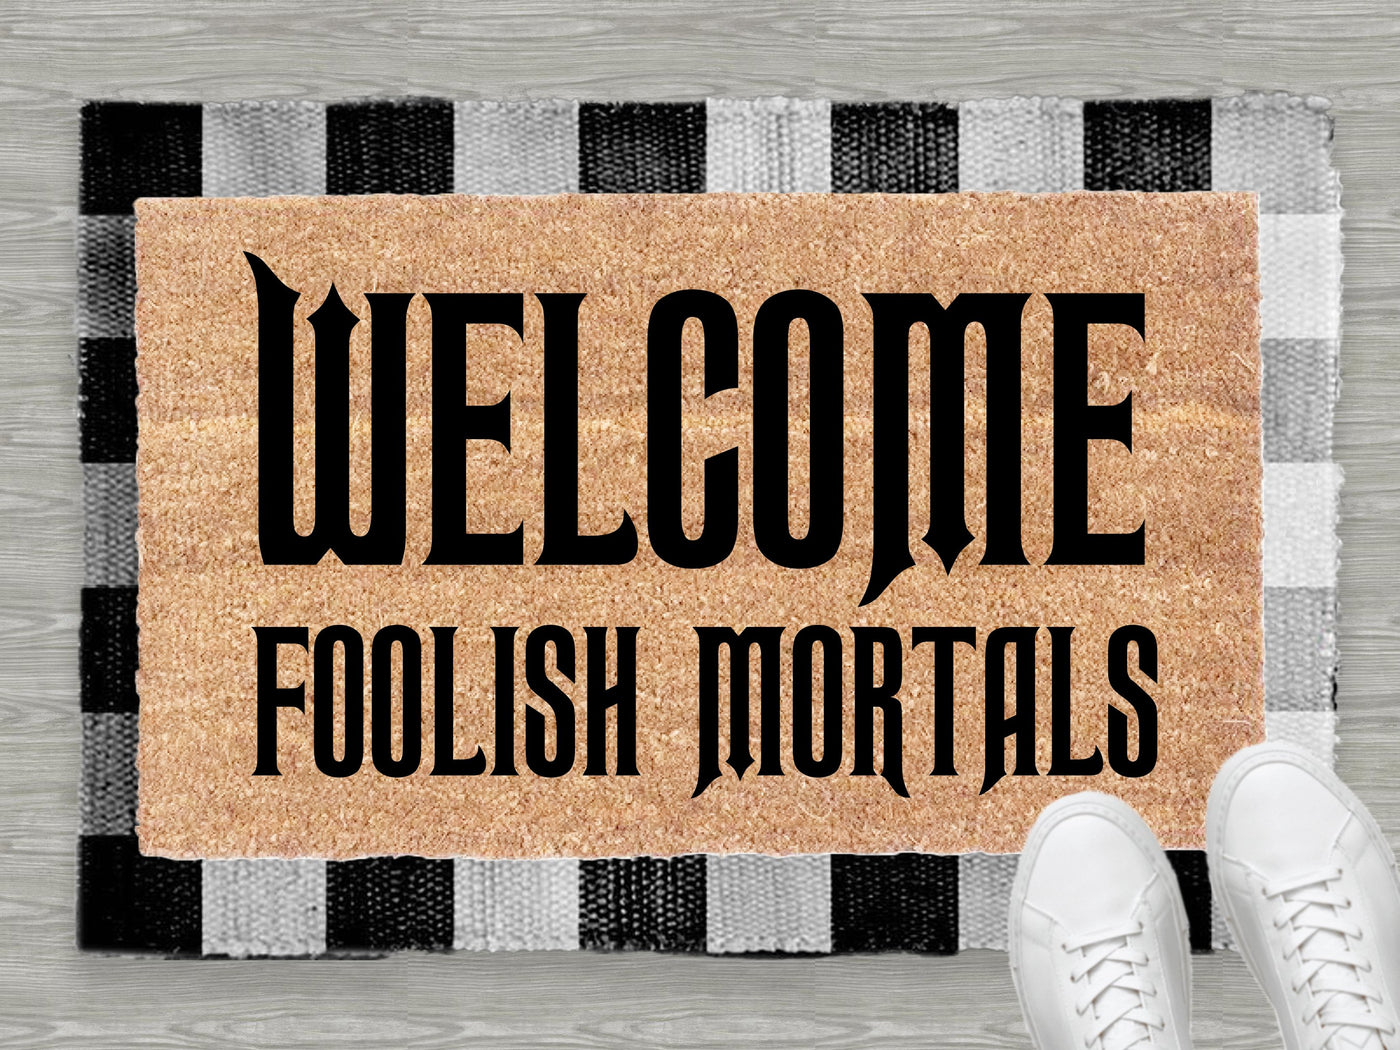 Welcome Foolish Mortals